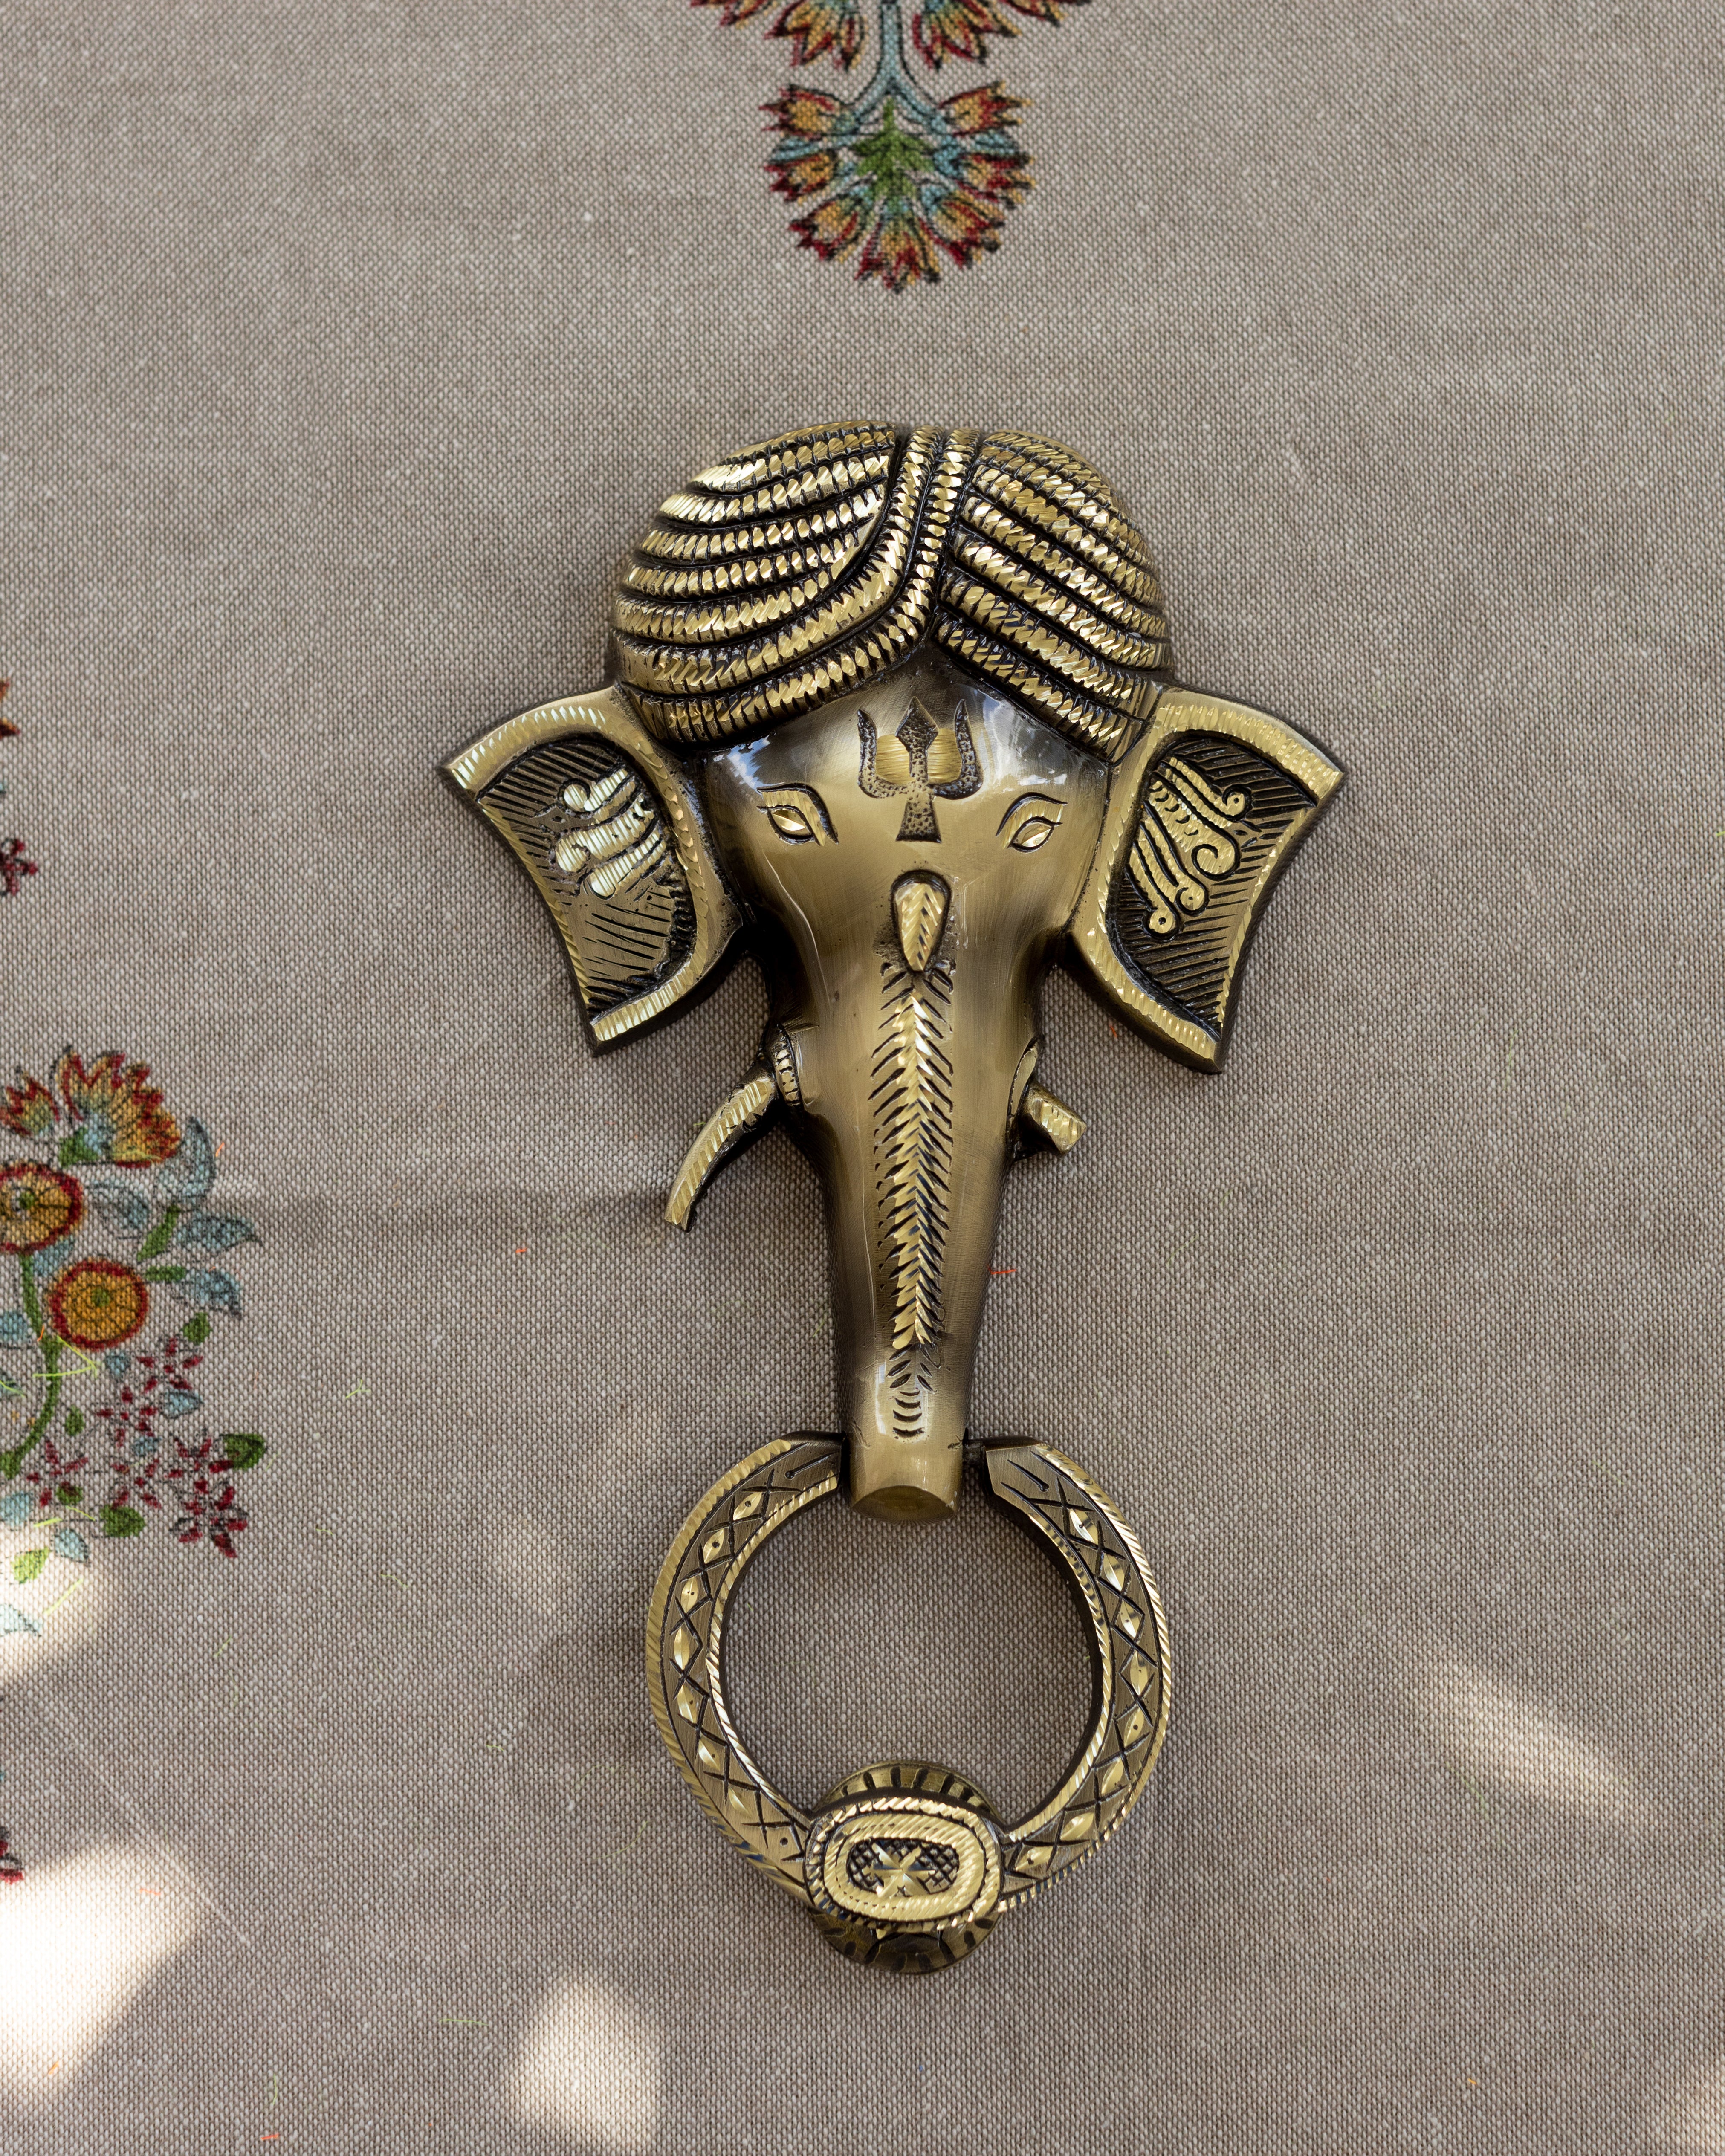 Antique Brass Lord Ganesha Door Knocker